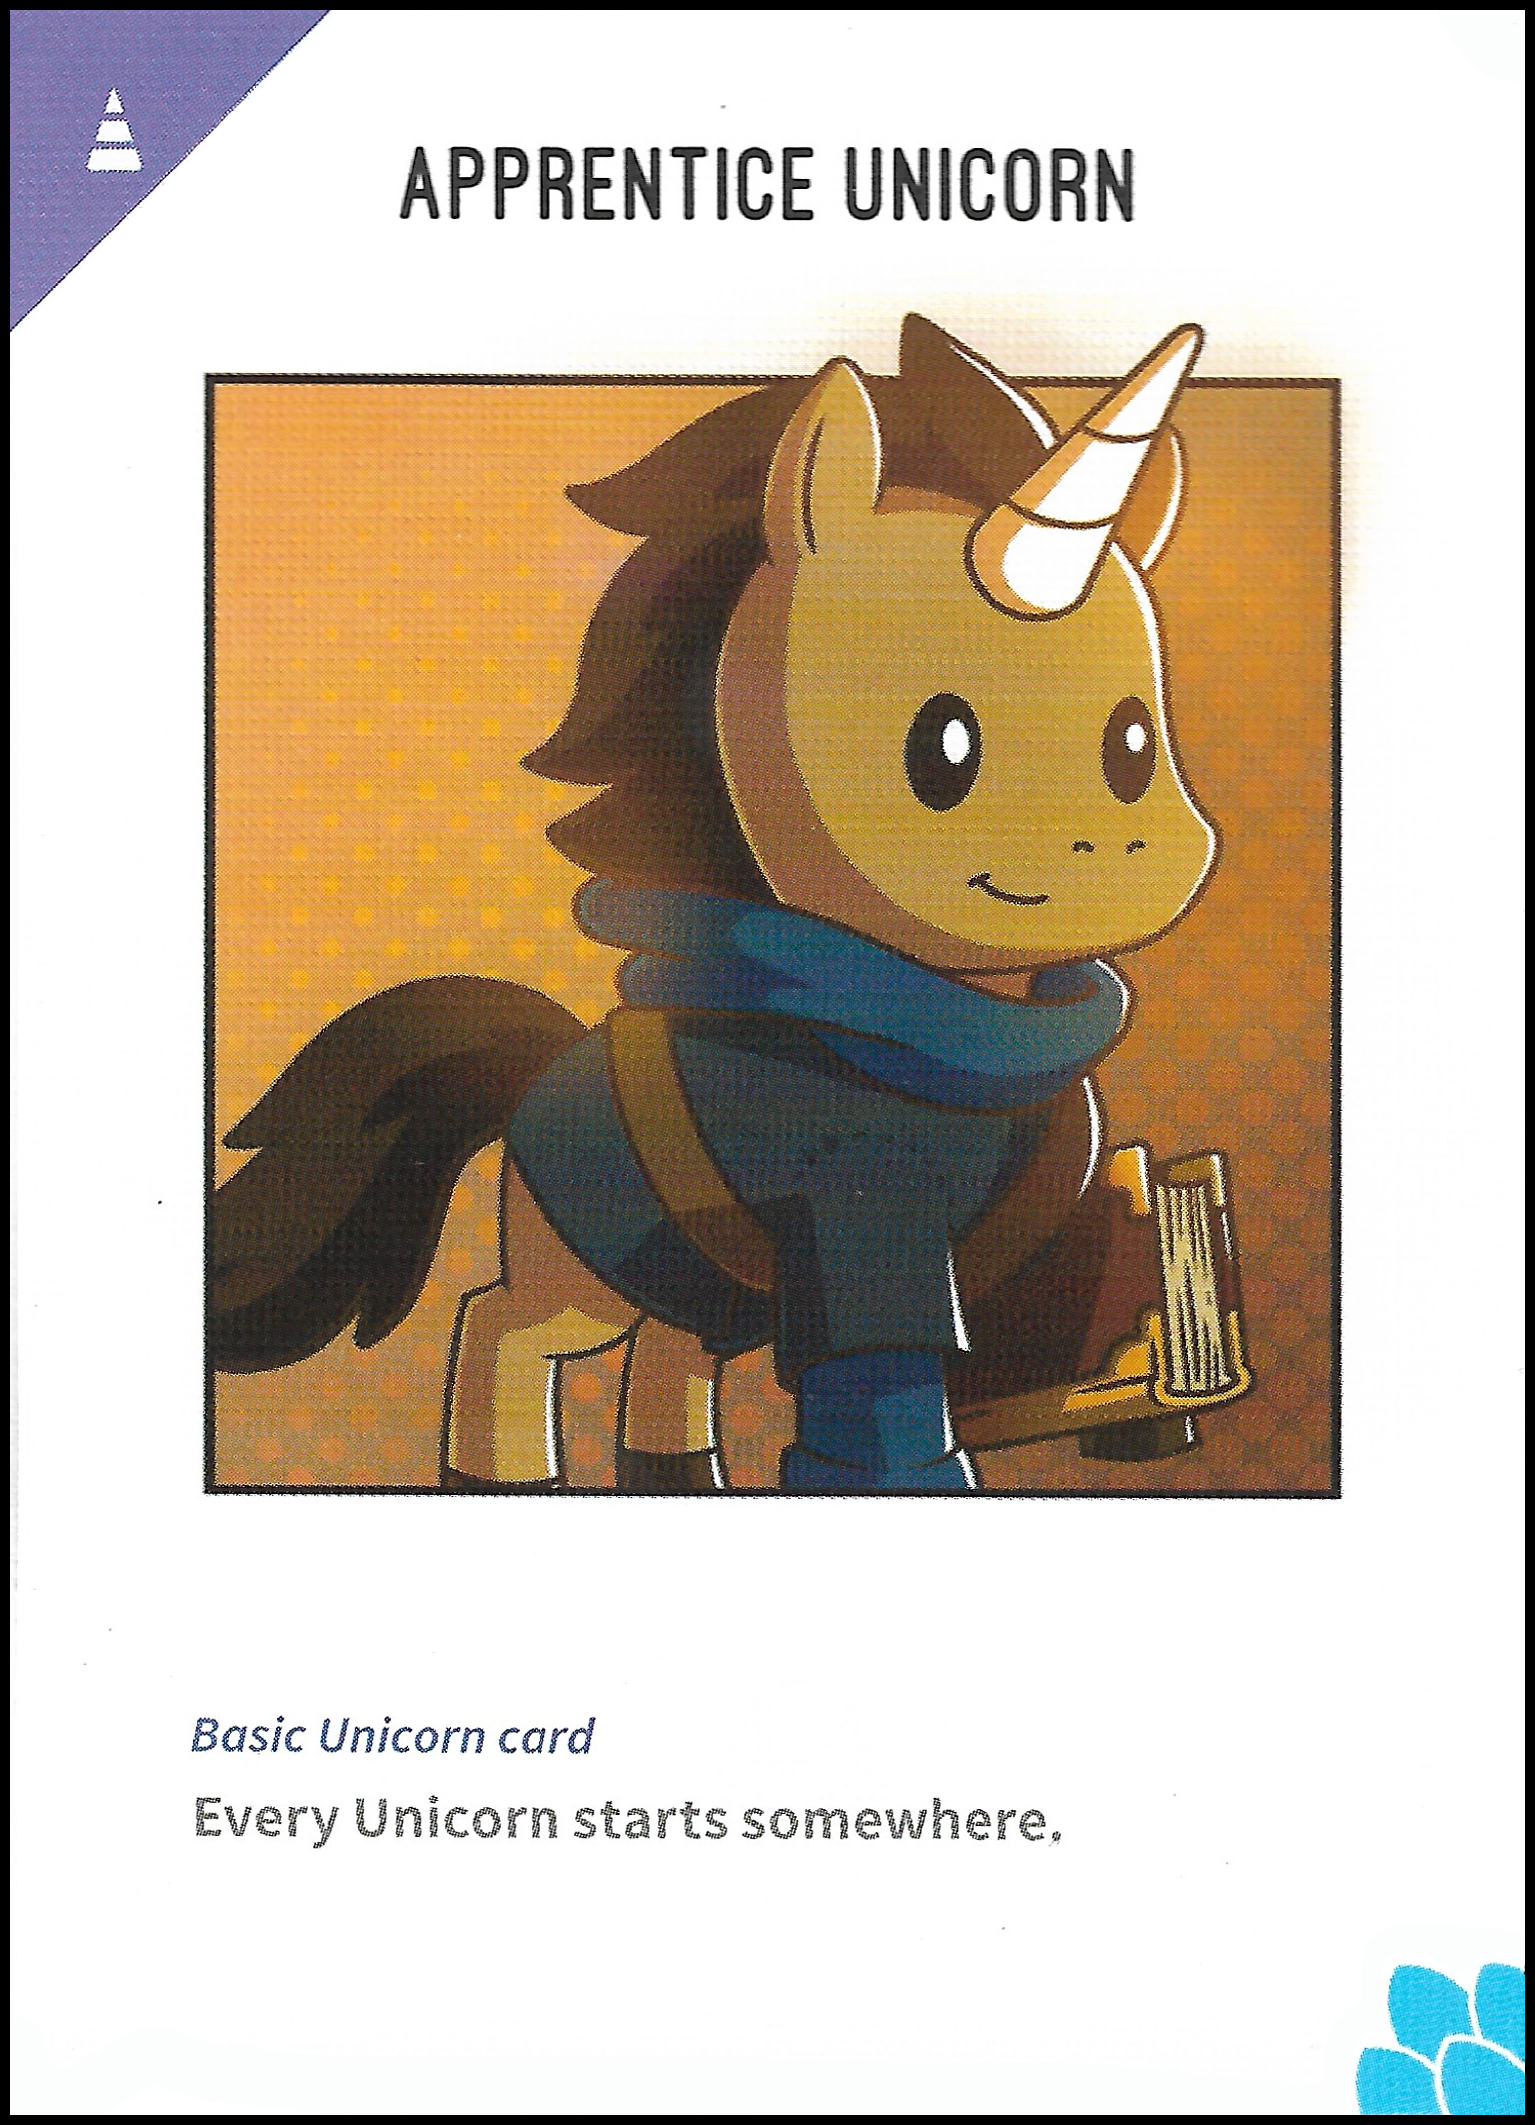 Apprentice Unicorn